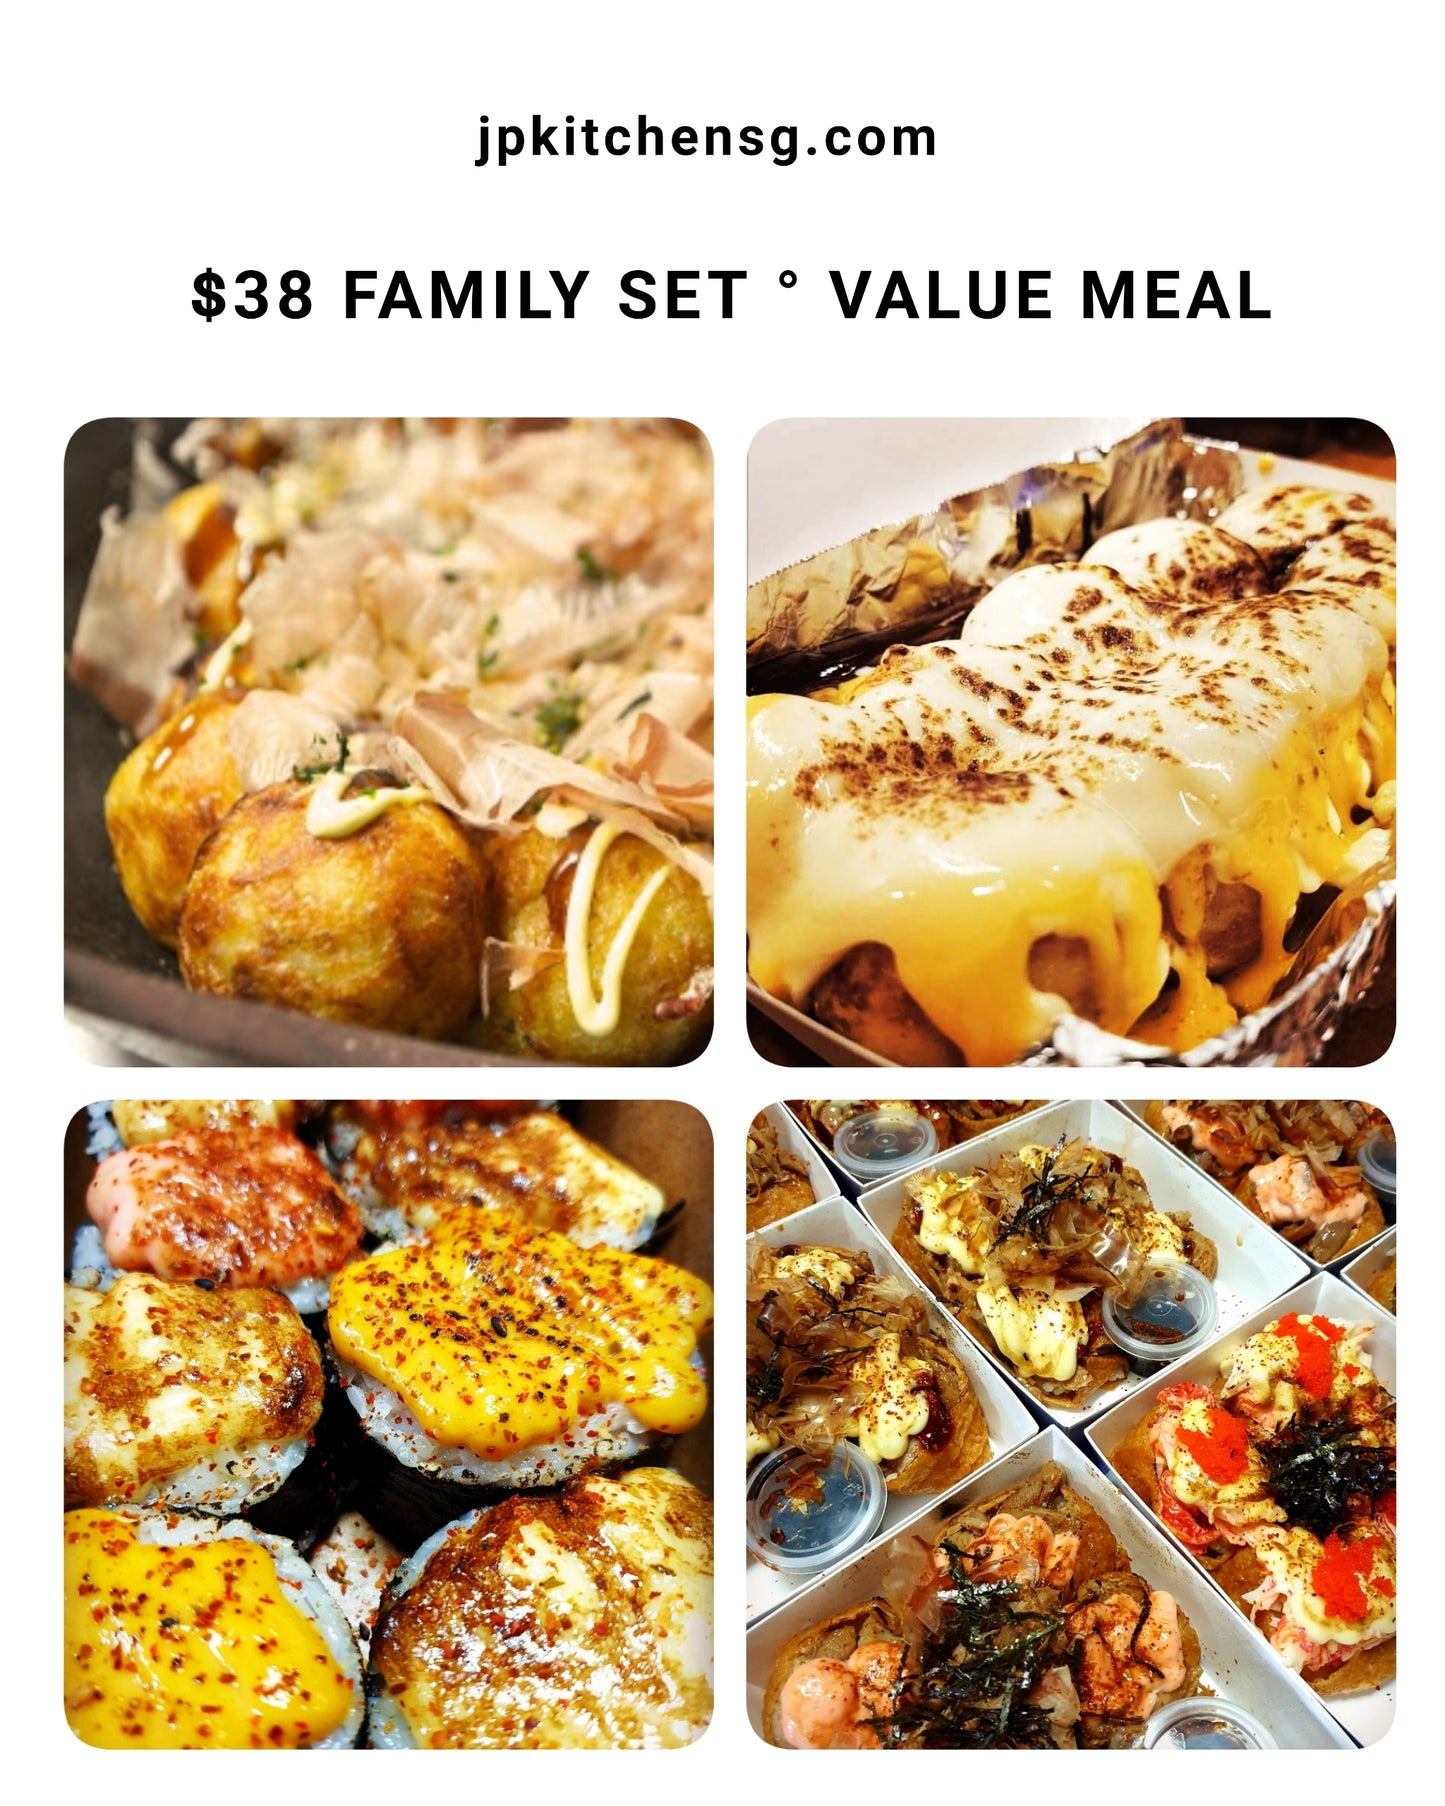 FAMILY SET : $38 (10pc takpyaki + 10pc cheesebomb takoyaki + 1 phoenix maki + 5pc mix inari)